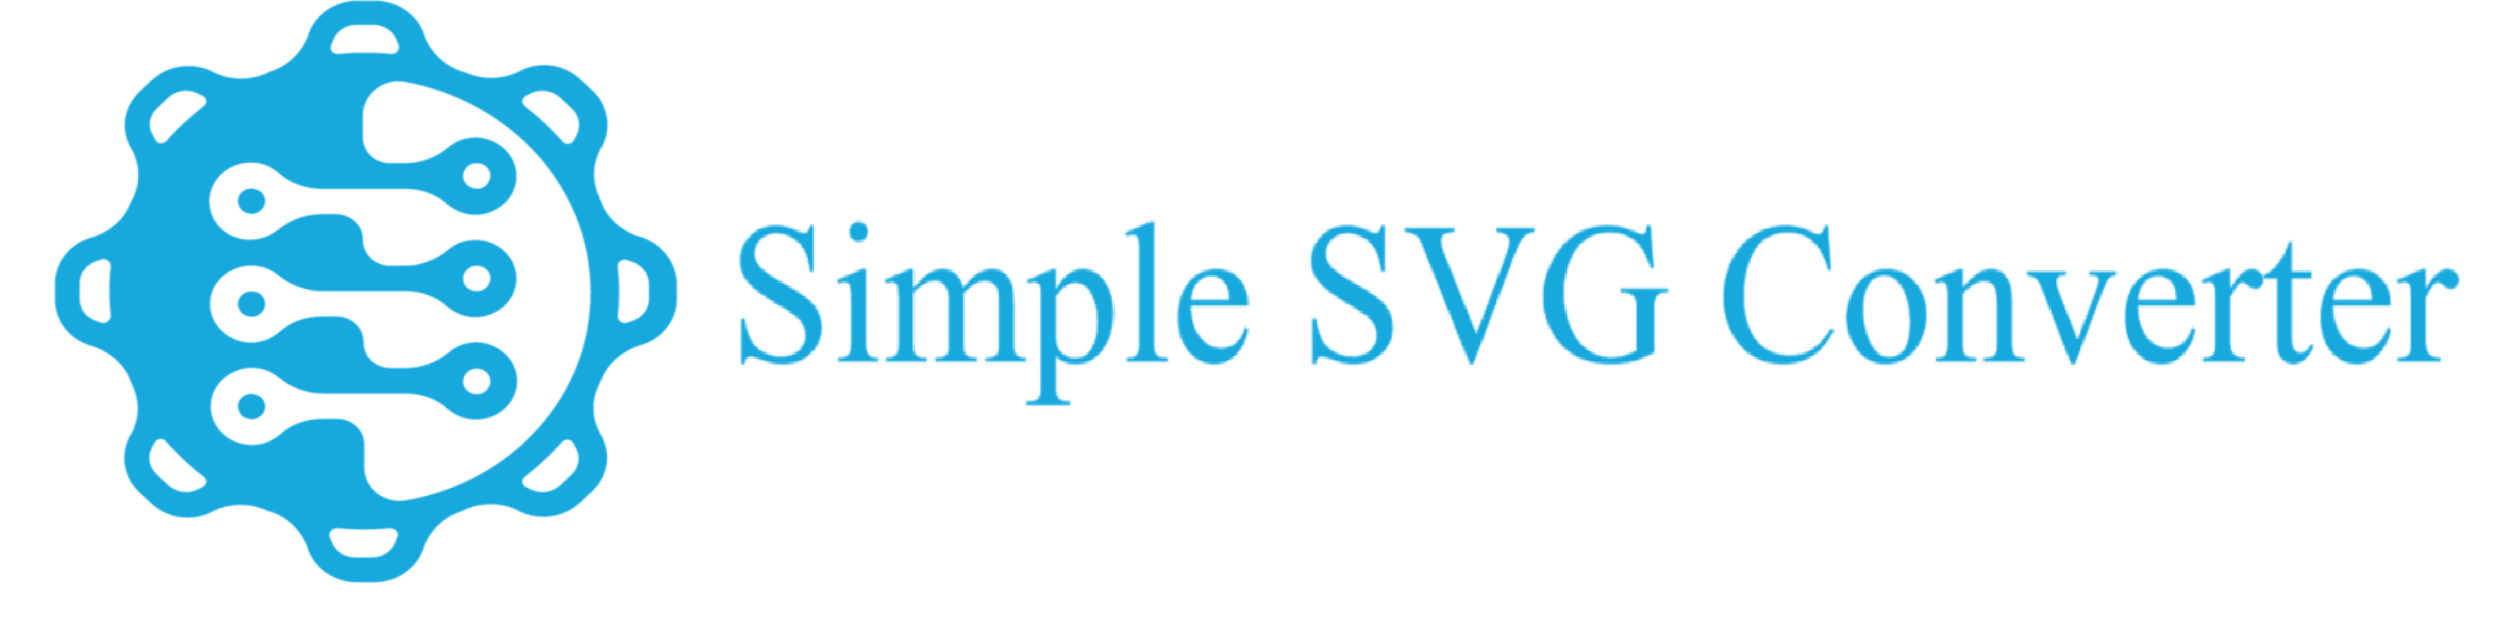 Simple SVG Converter (1)